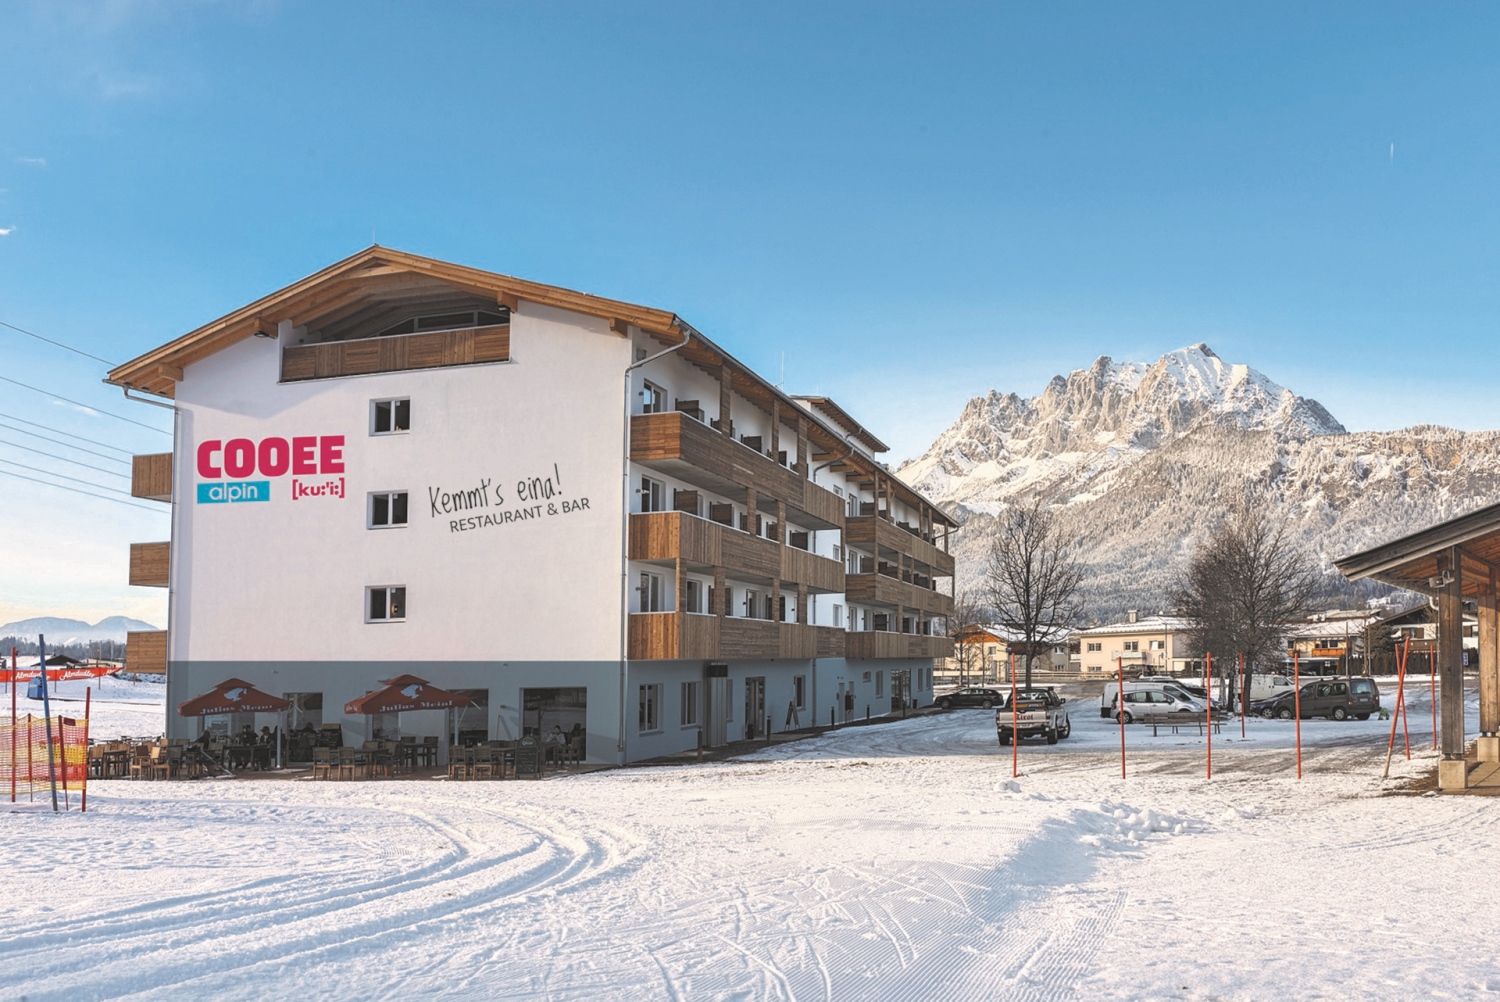 COOEE Accomodation next to snowy mountain - St Johann in Tirol, Austria